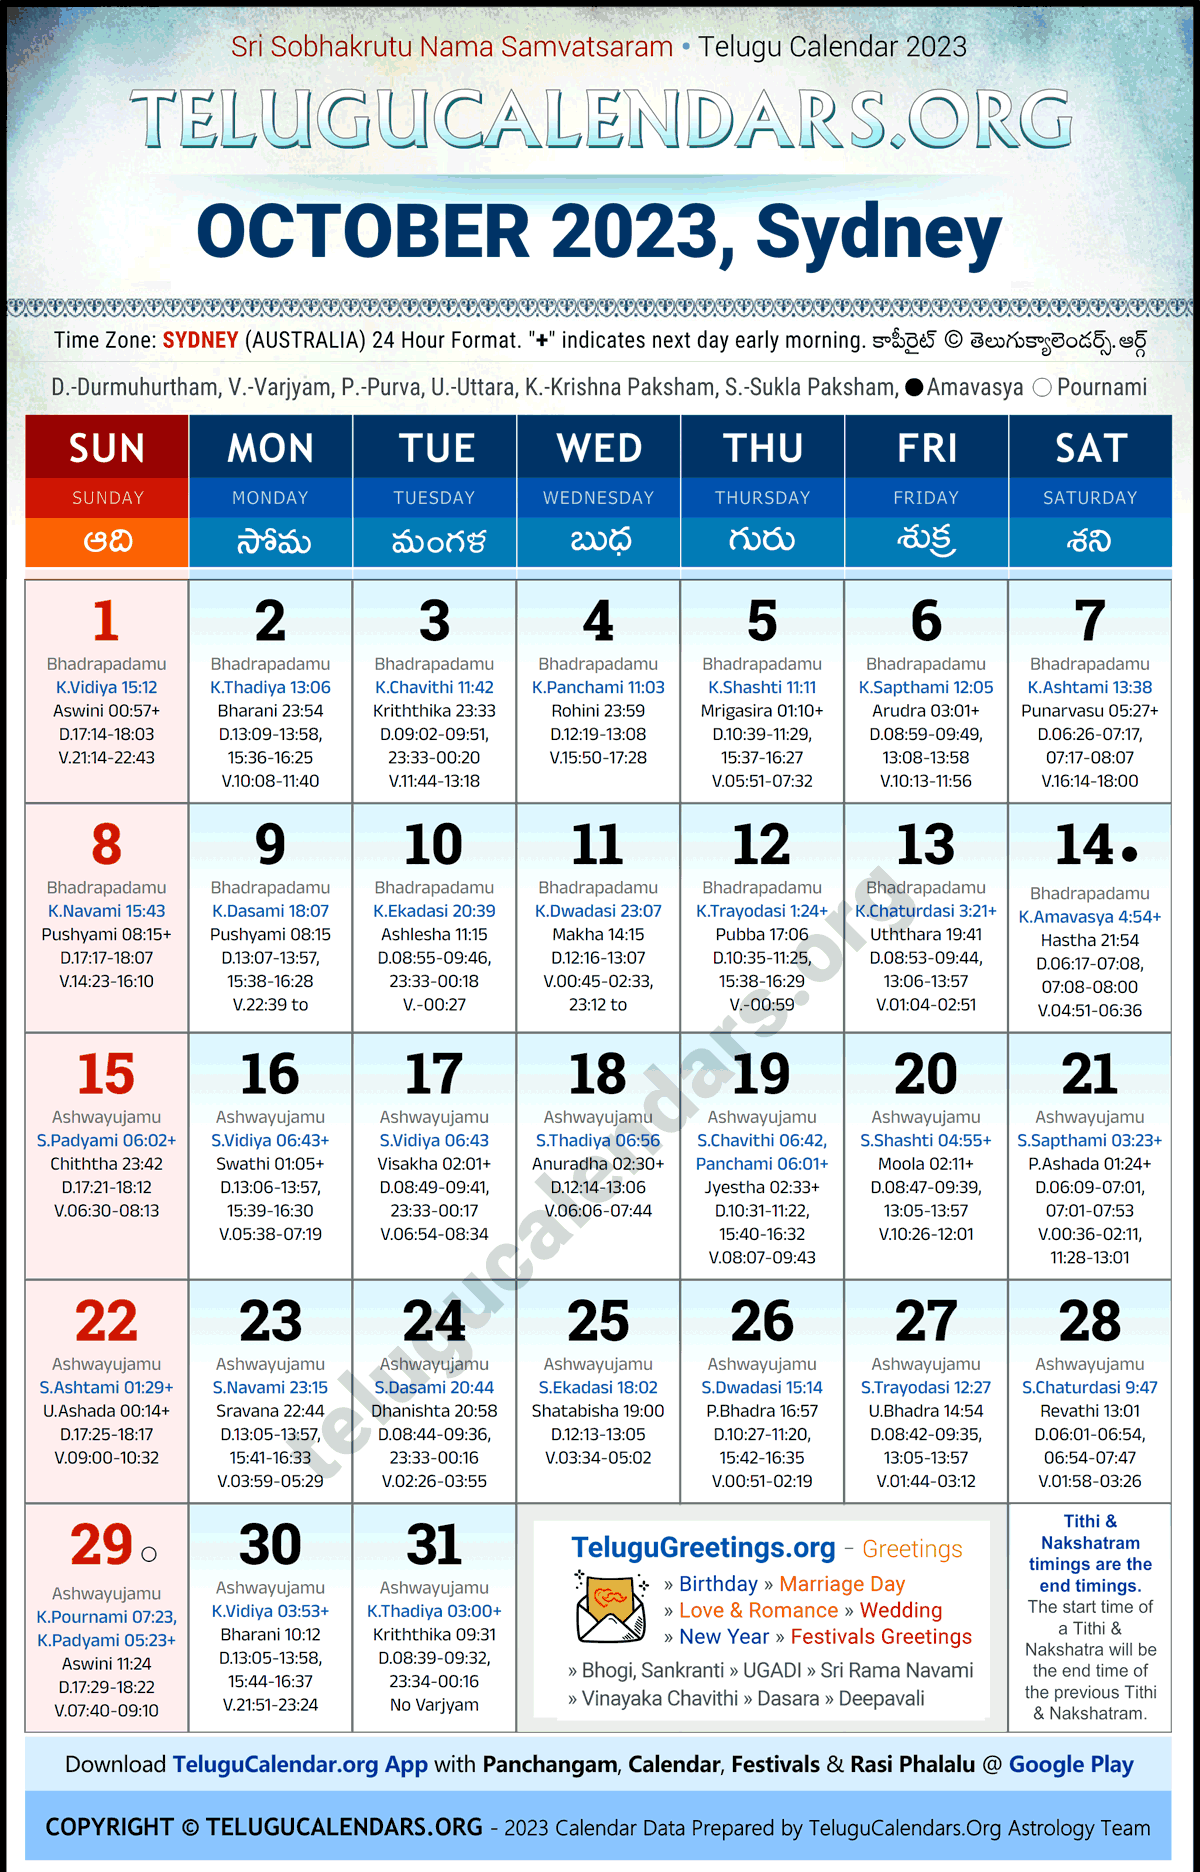 Telugu Calendar 2023 October Festivals for Sydney